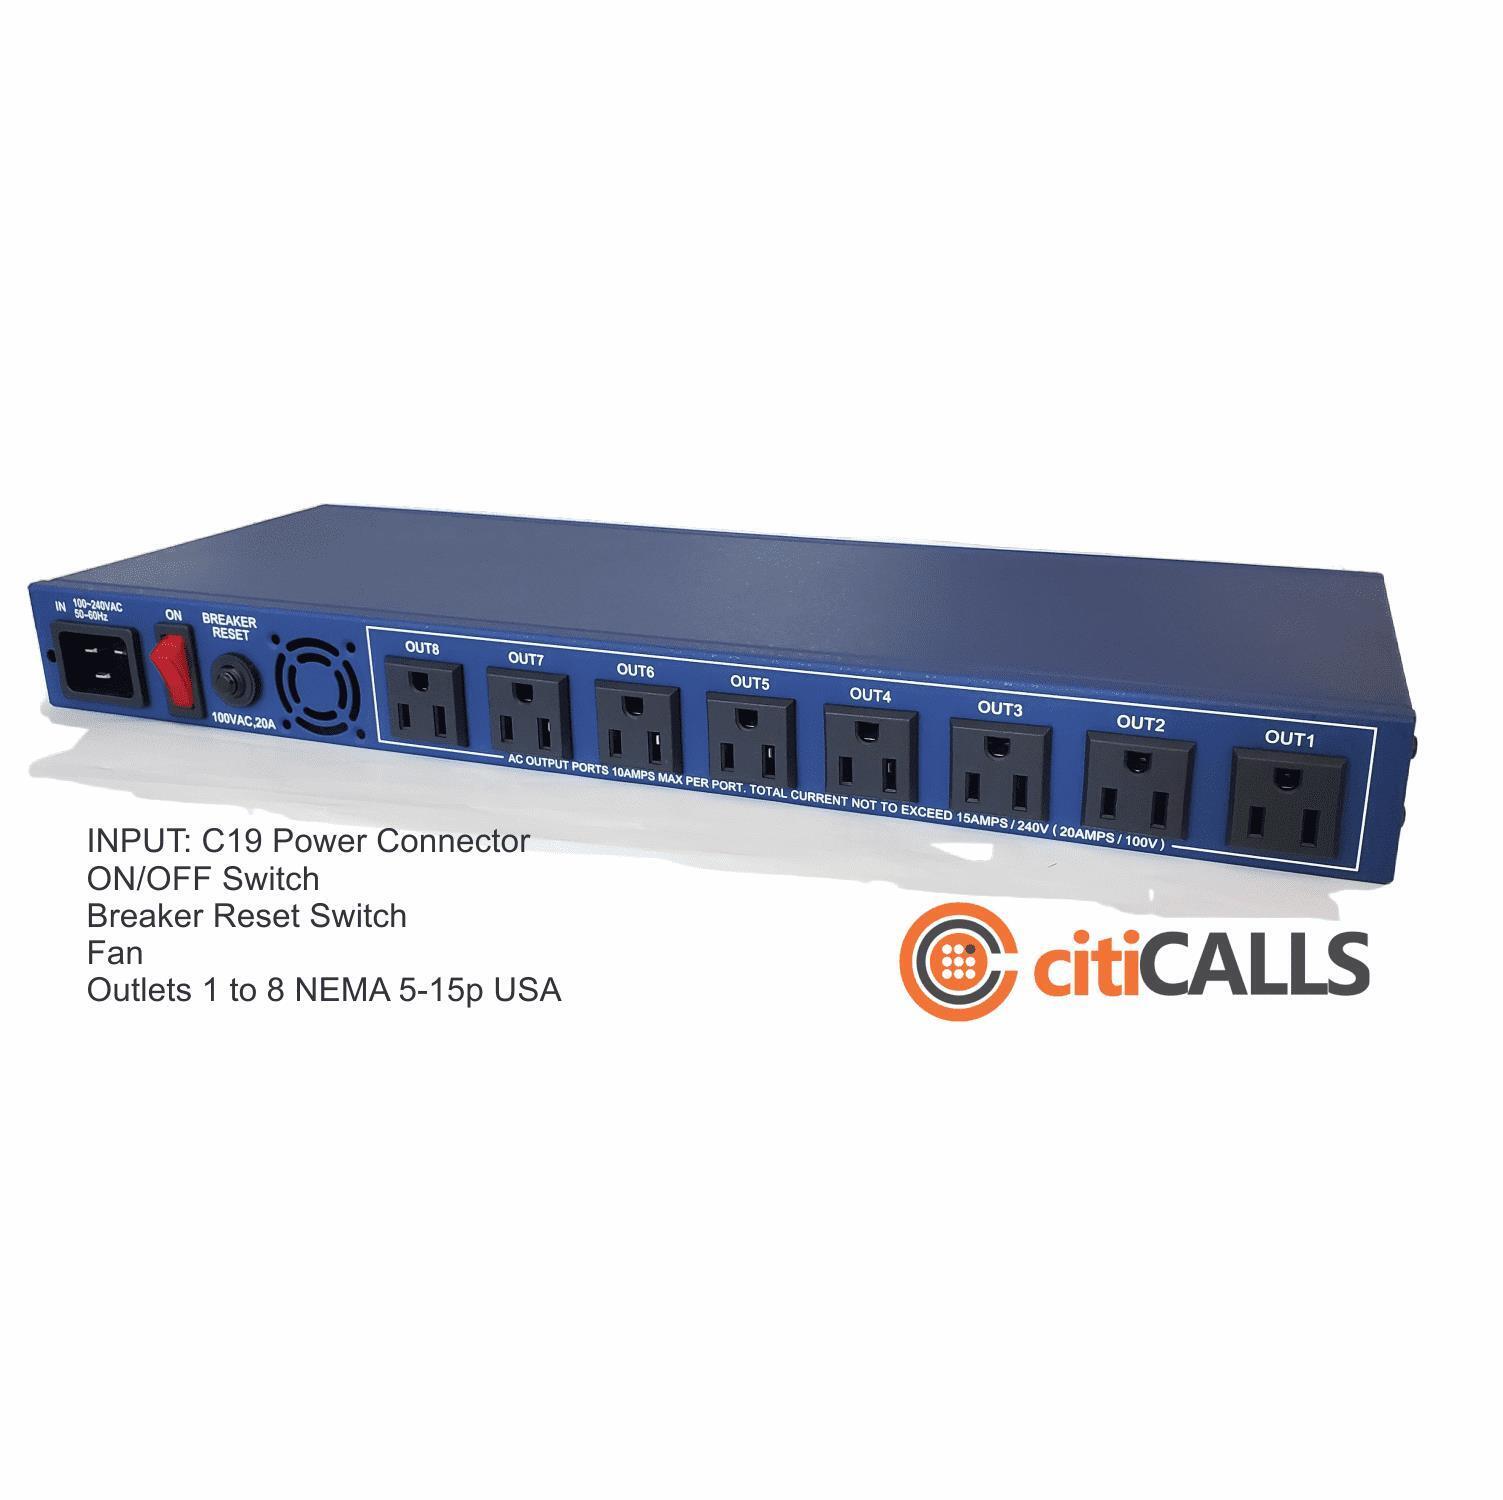 Aviosys IP9820MT 8 Port Web Power Controller Switch Pro Rack Mount Reboot Ping